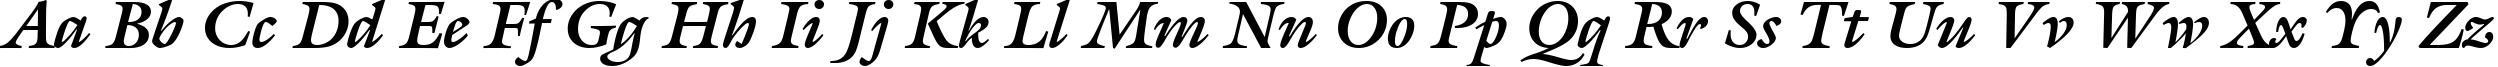 Пример написания английского алфавита шрифтом Galliard Bold Italic BT